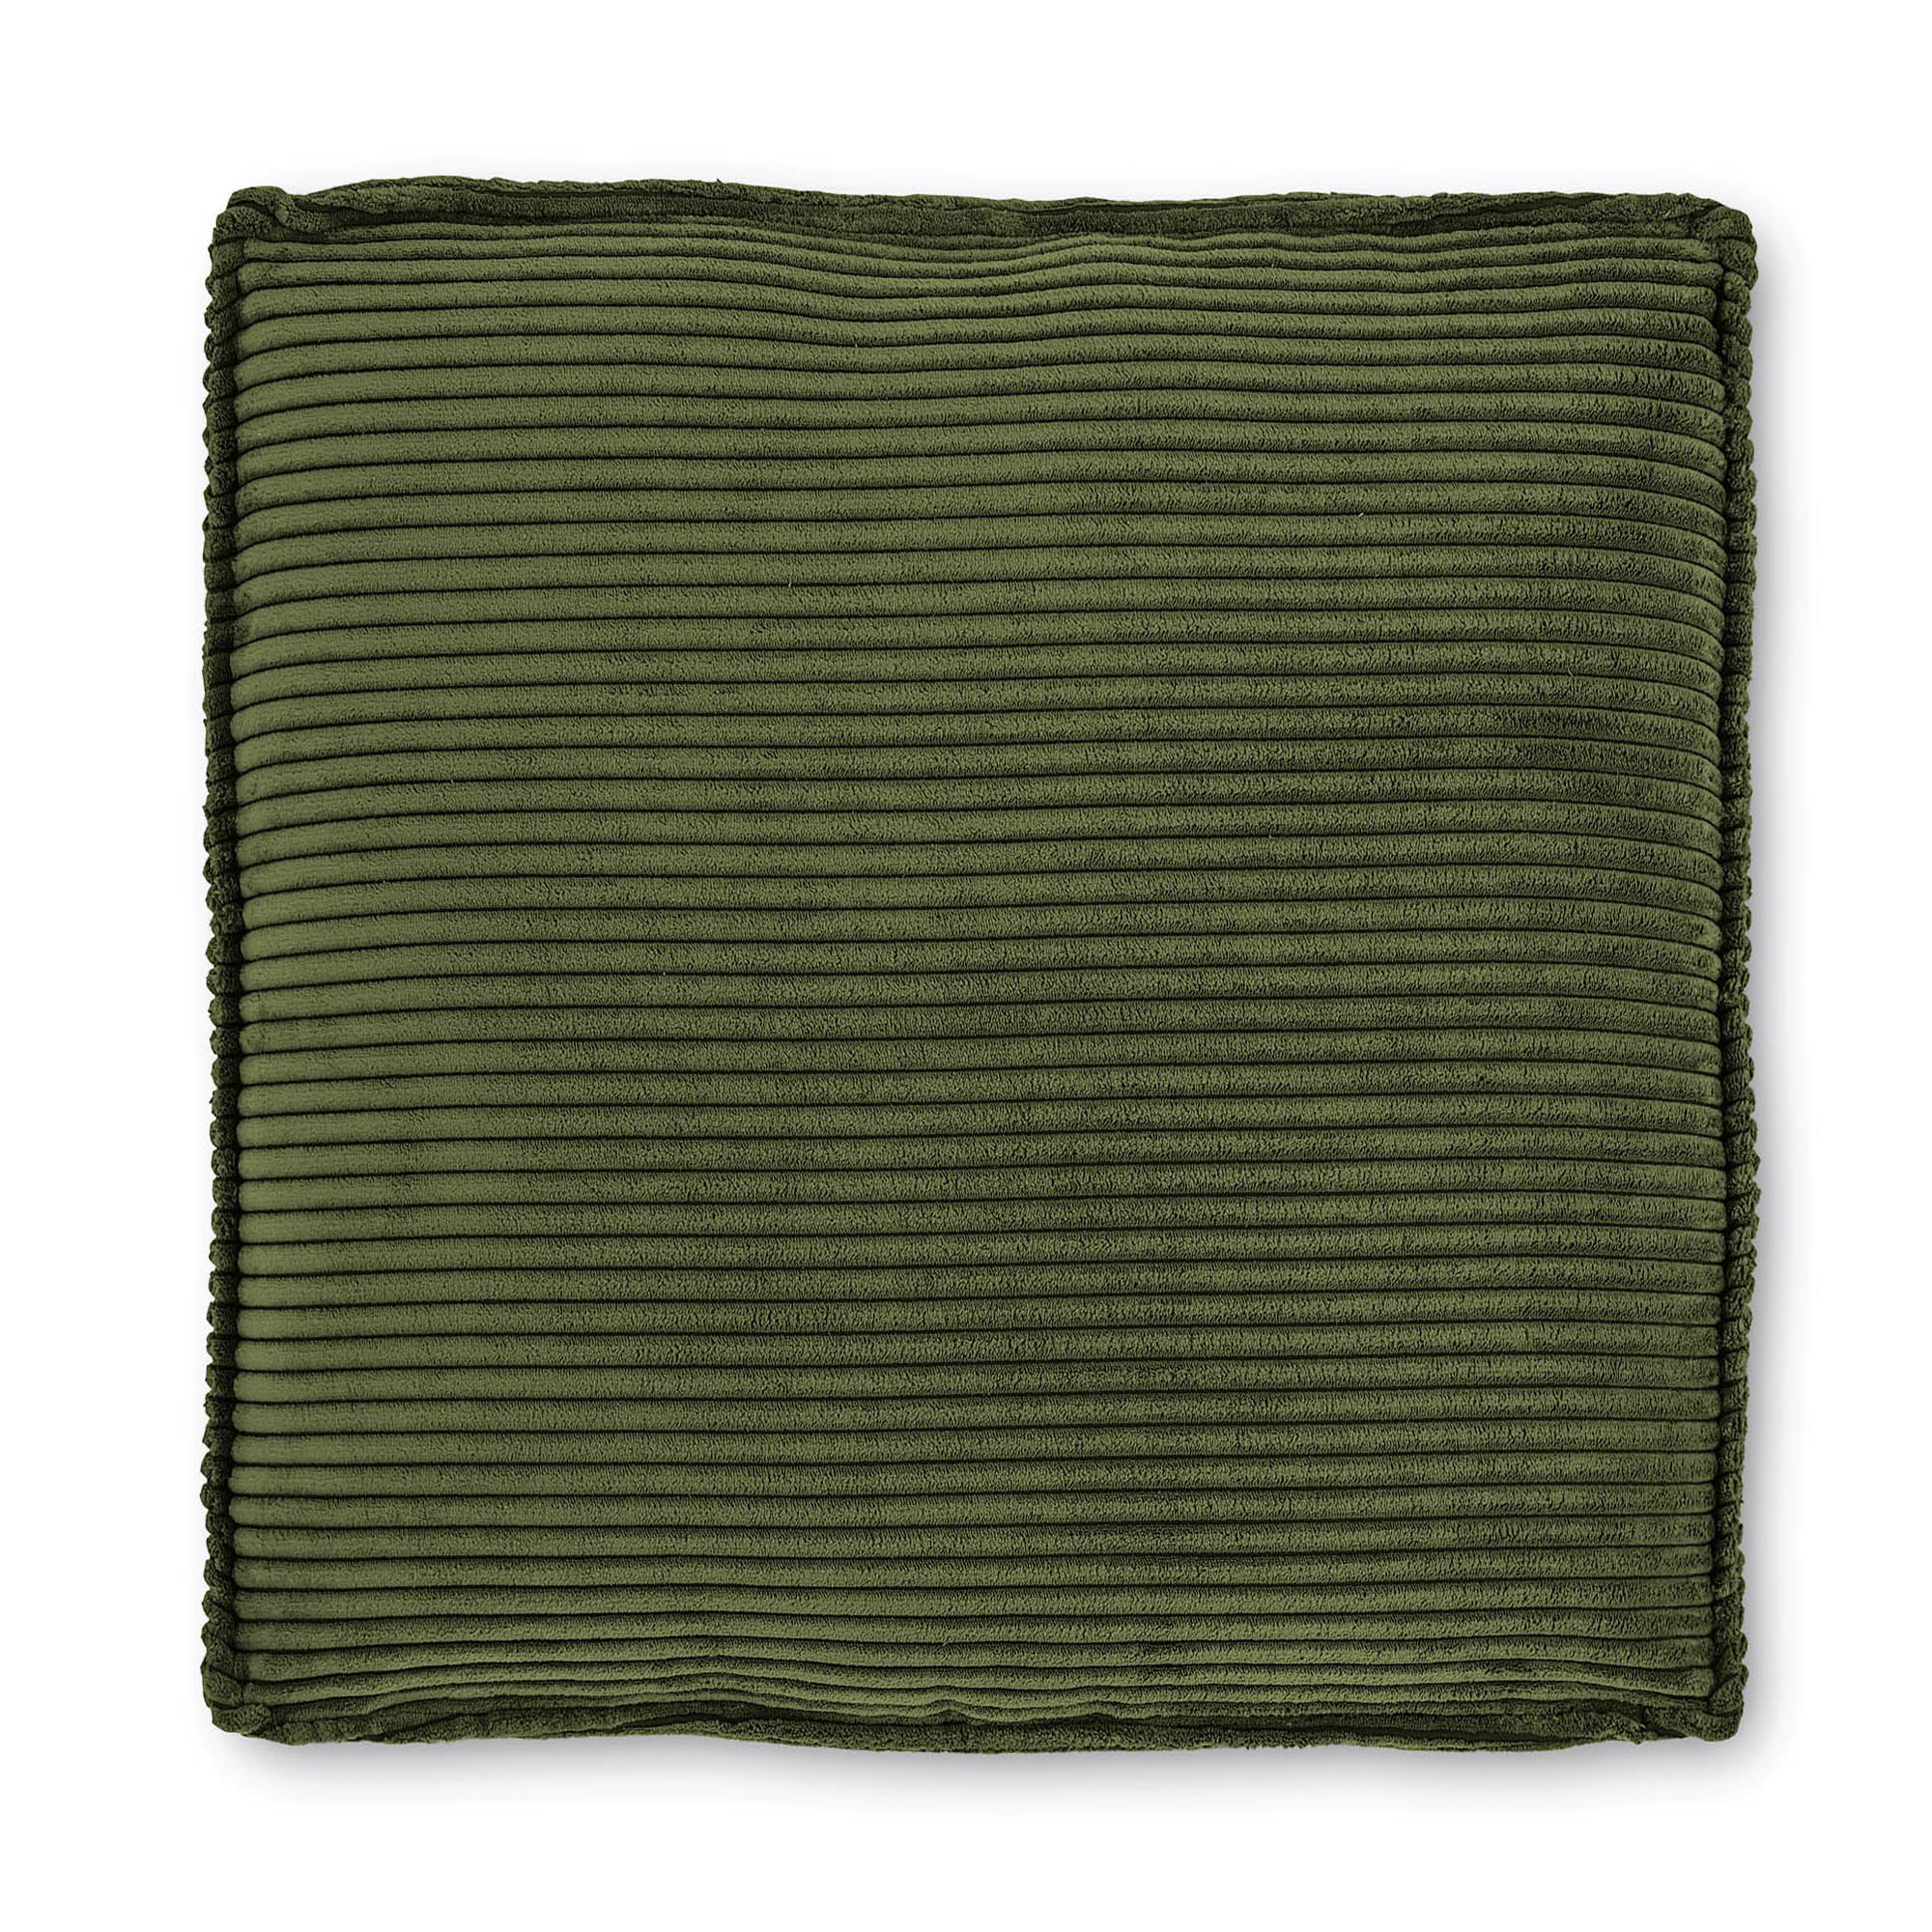 Blok cushion in green wide seam corduroy, 60 x 60 cm